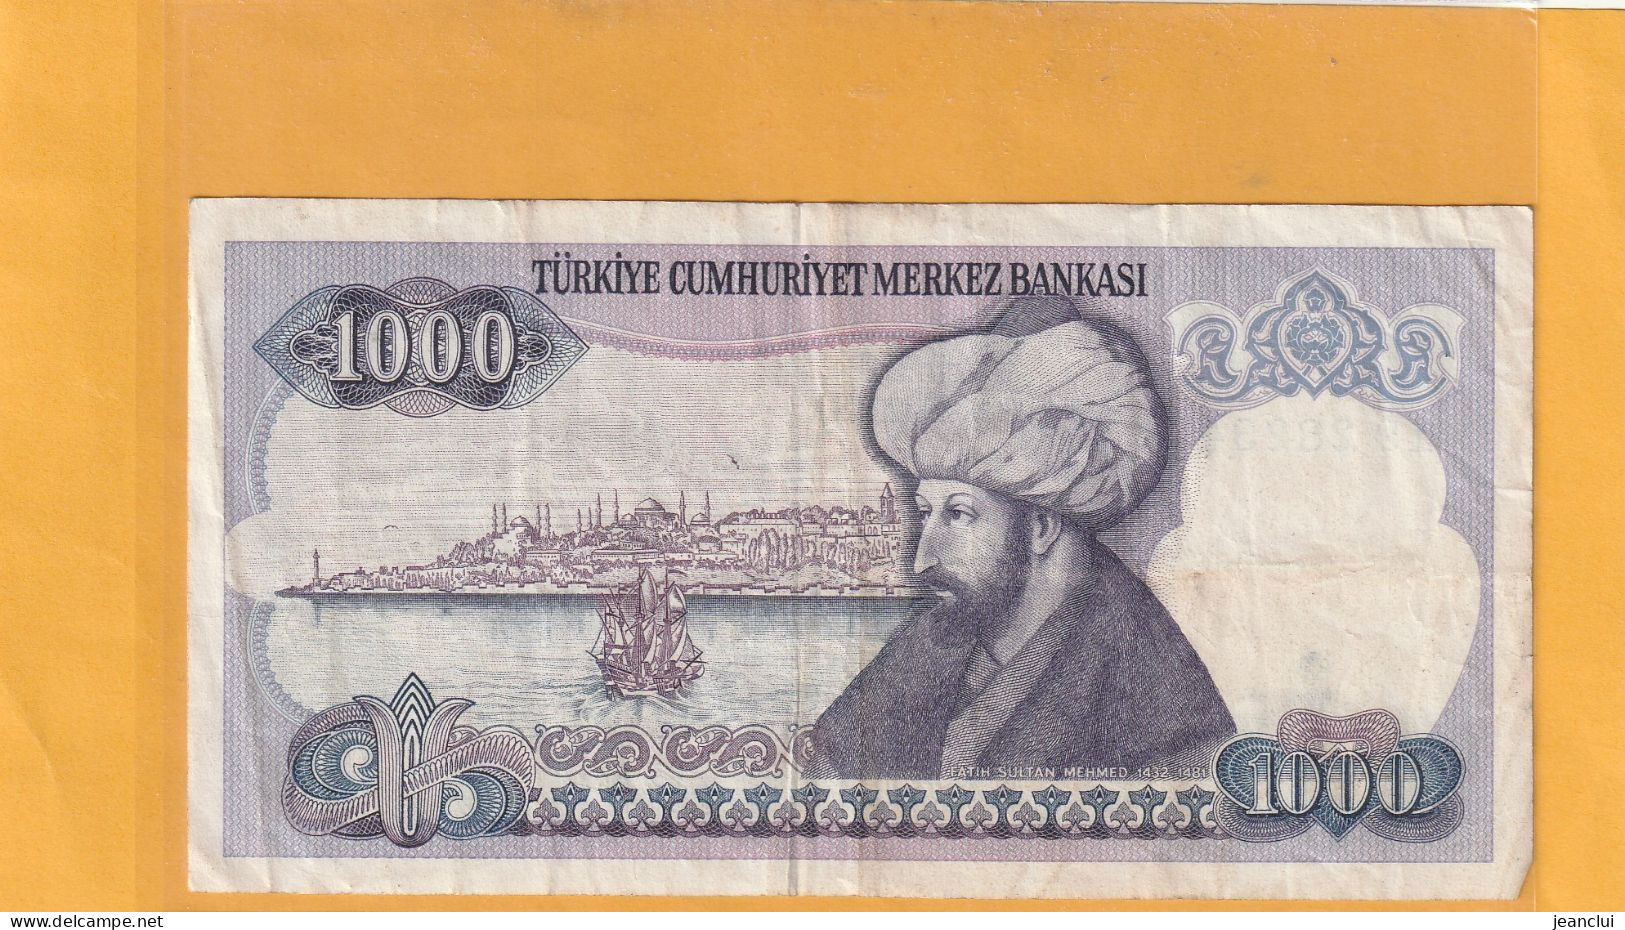 TURKIYE CUMHURIYET MERKEZ BANKASI . 1.000 LIRA . 14 OCAK 1970  . N°  A19 282347 .  2 SCANNES  .  BILLET USITE - Turquie